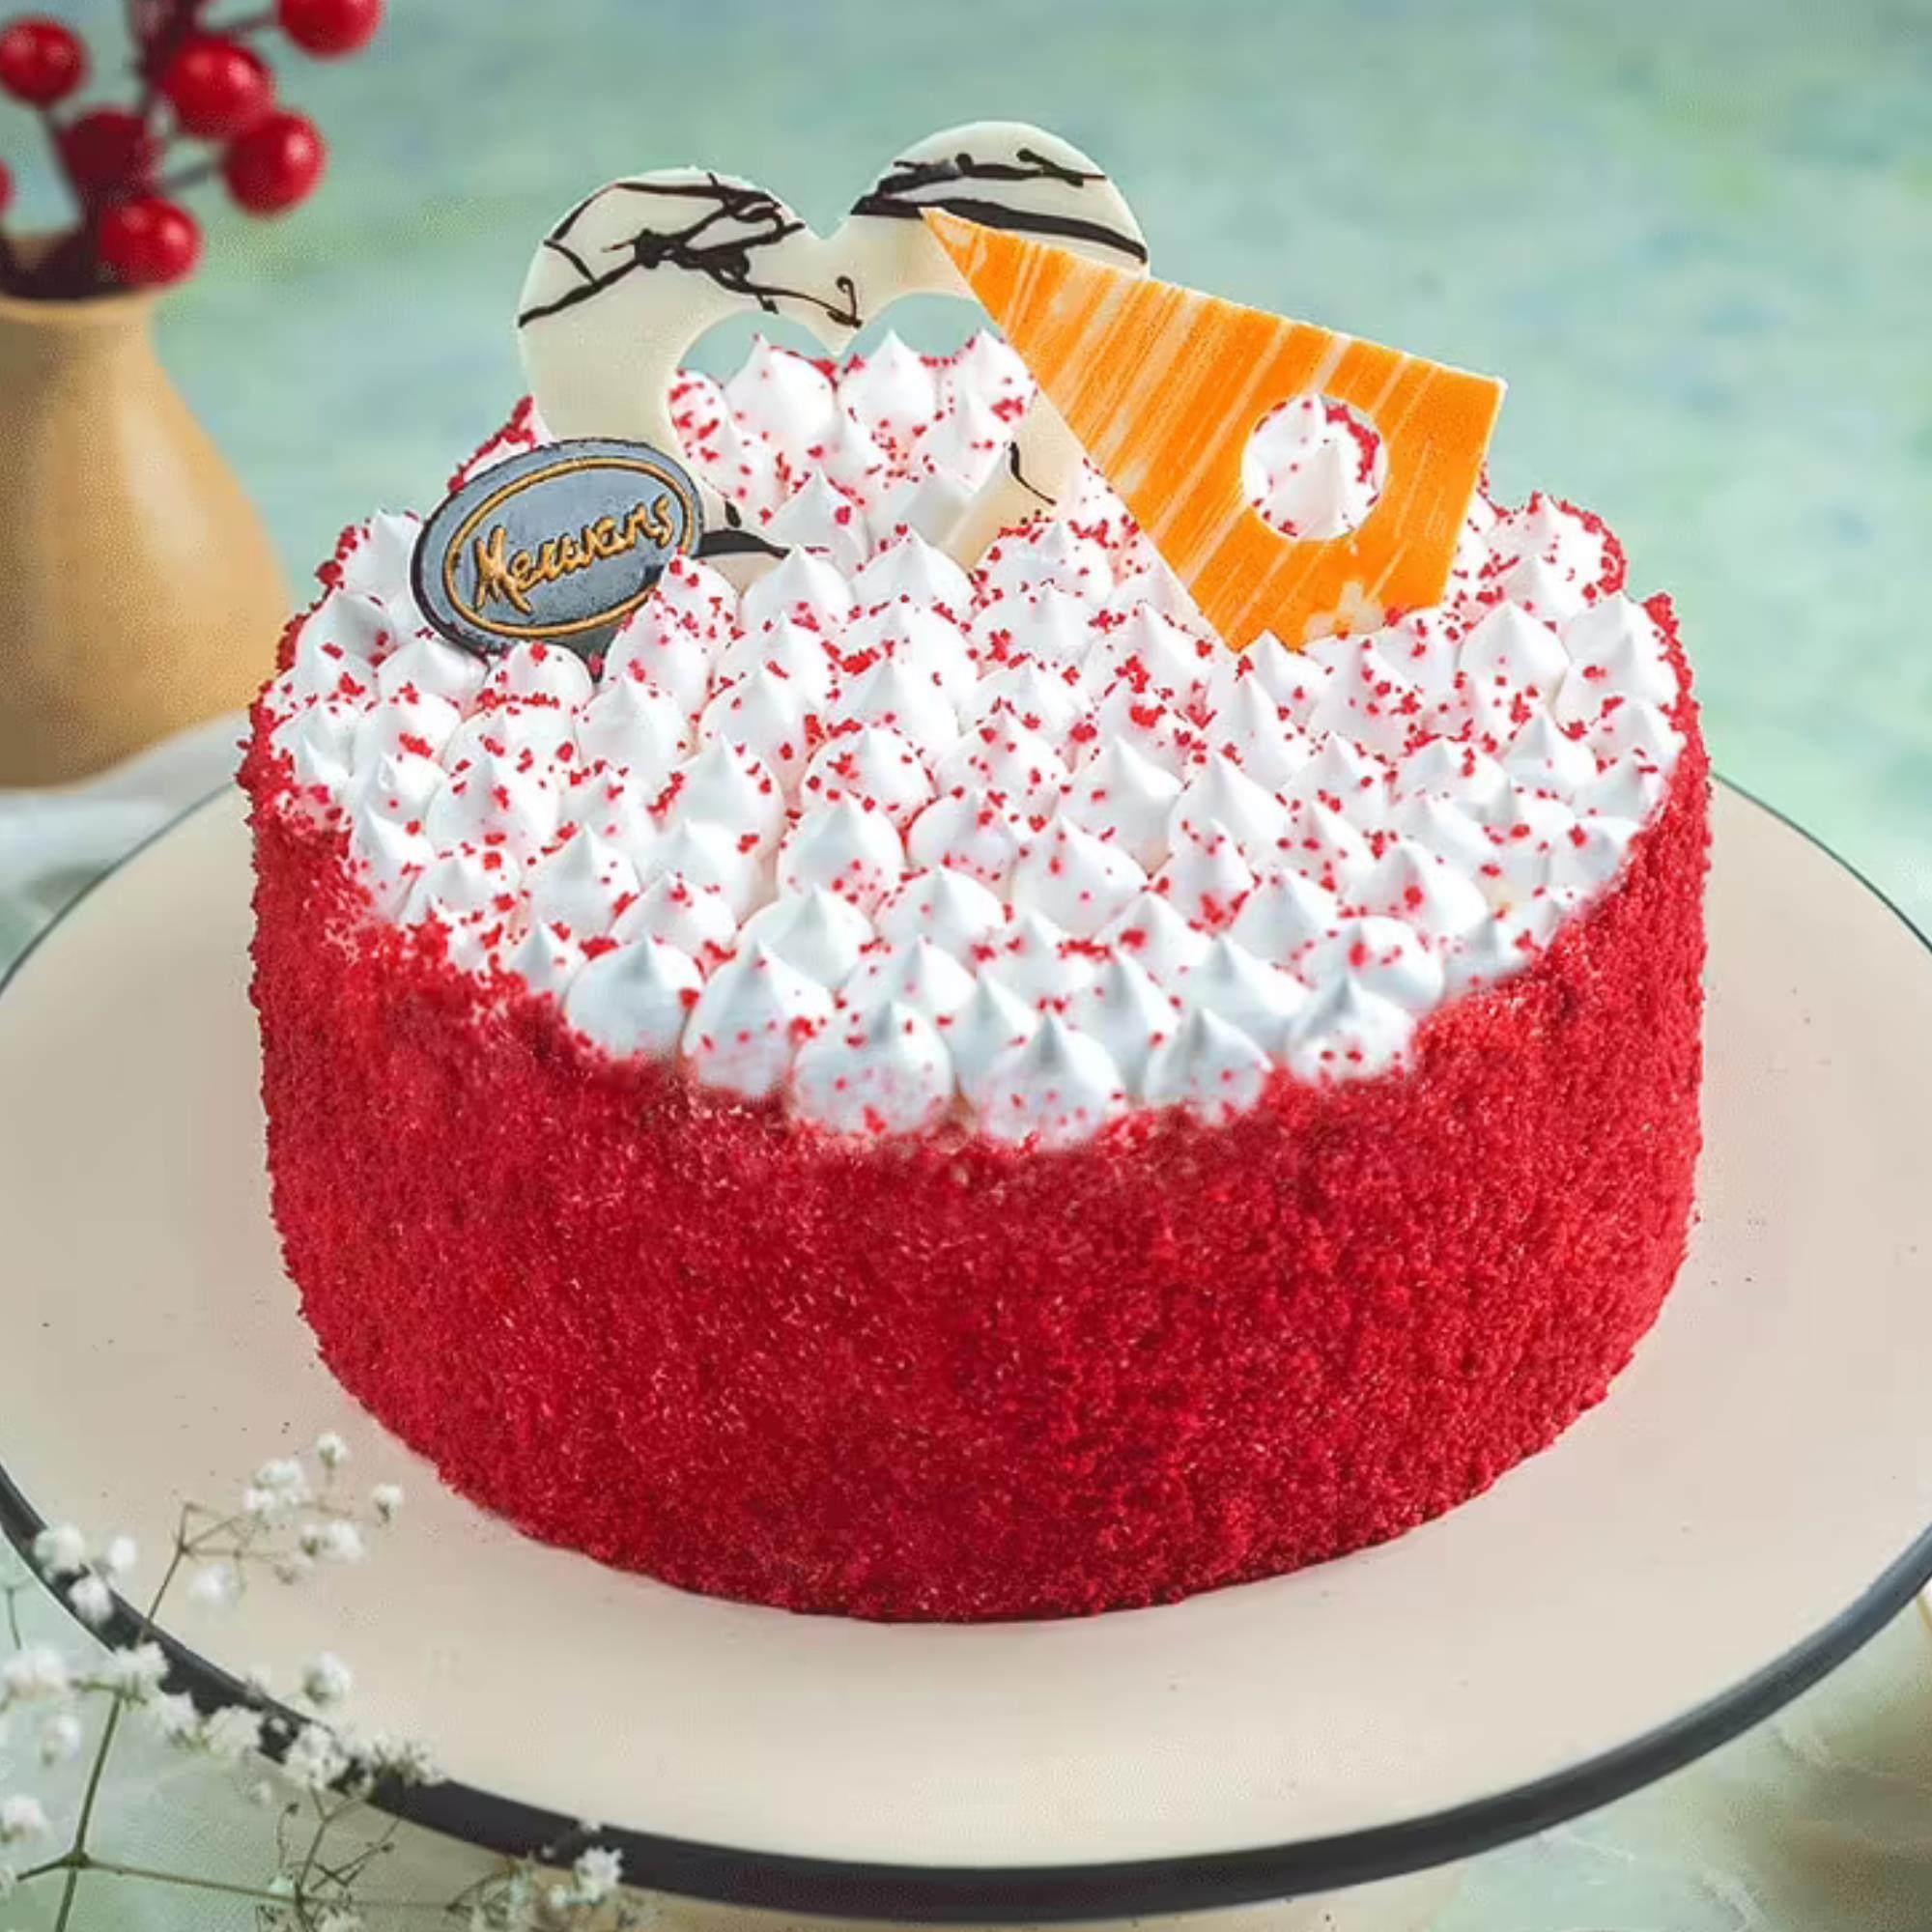 Bakels Red Velvet Cake Mix 1kg - Padstow Food Service Distributors